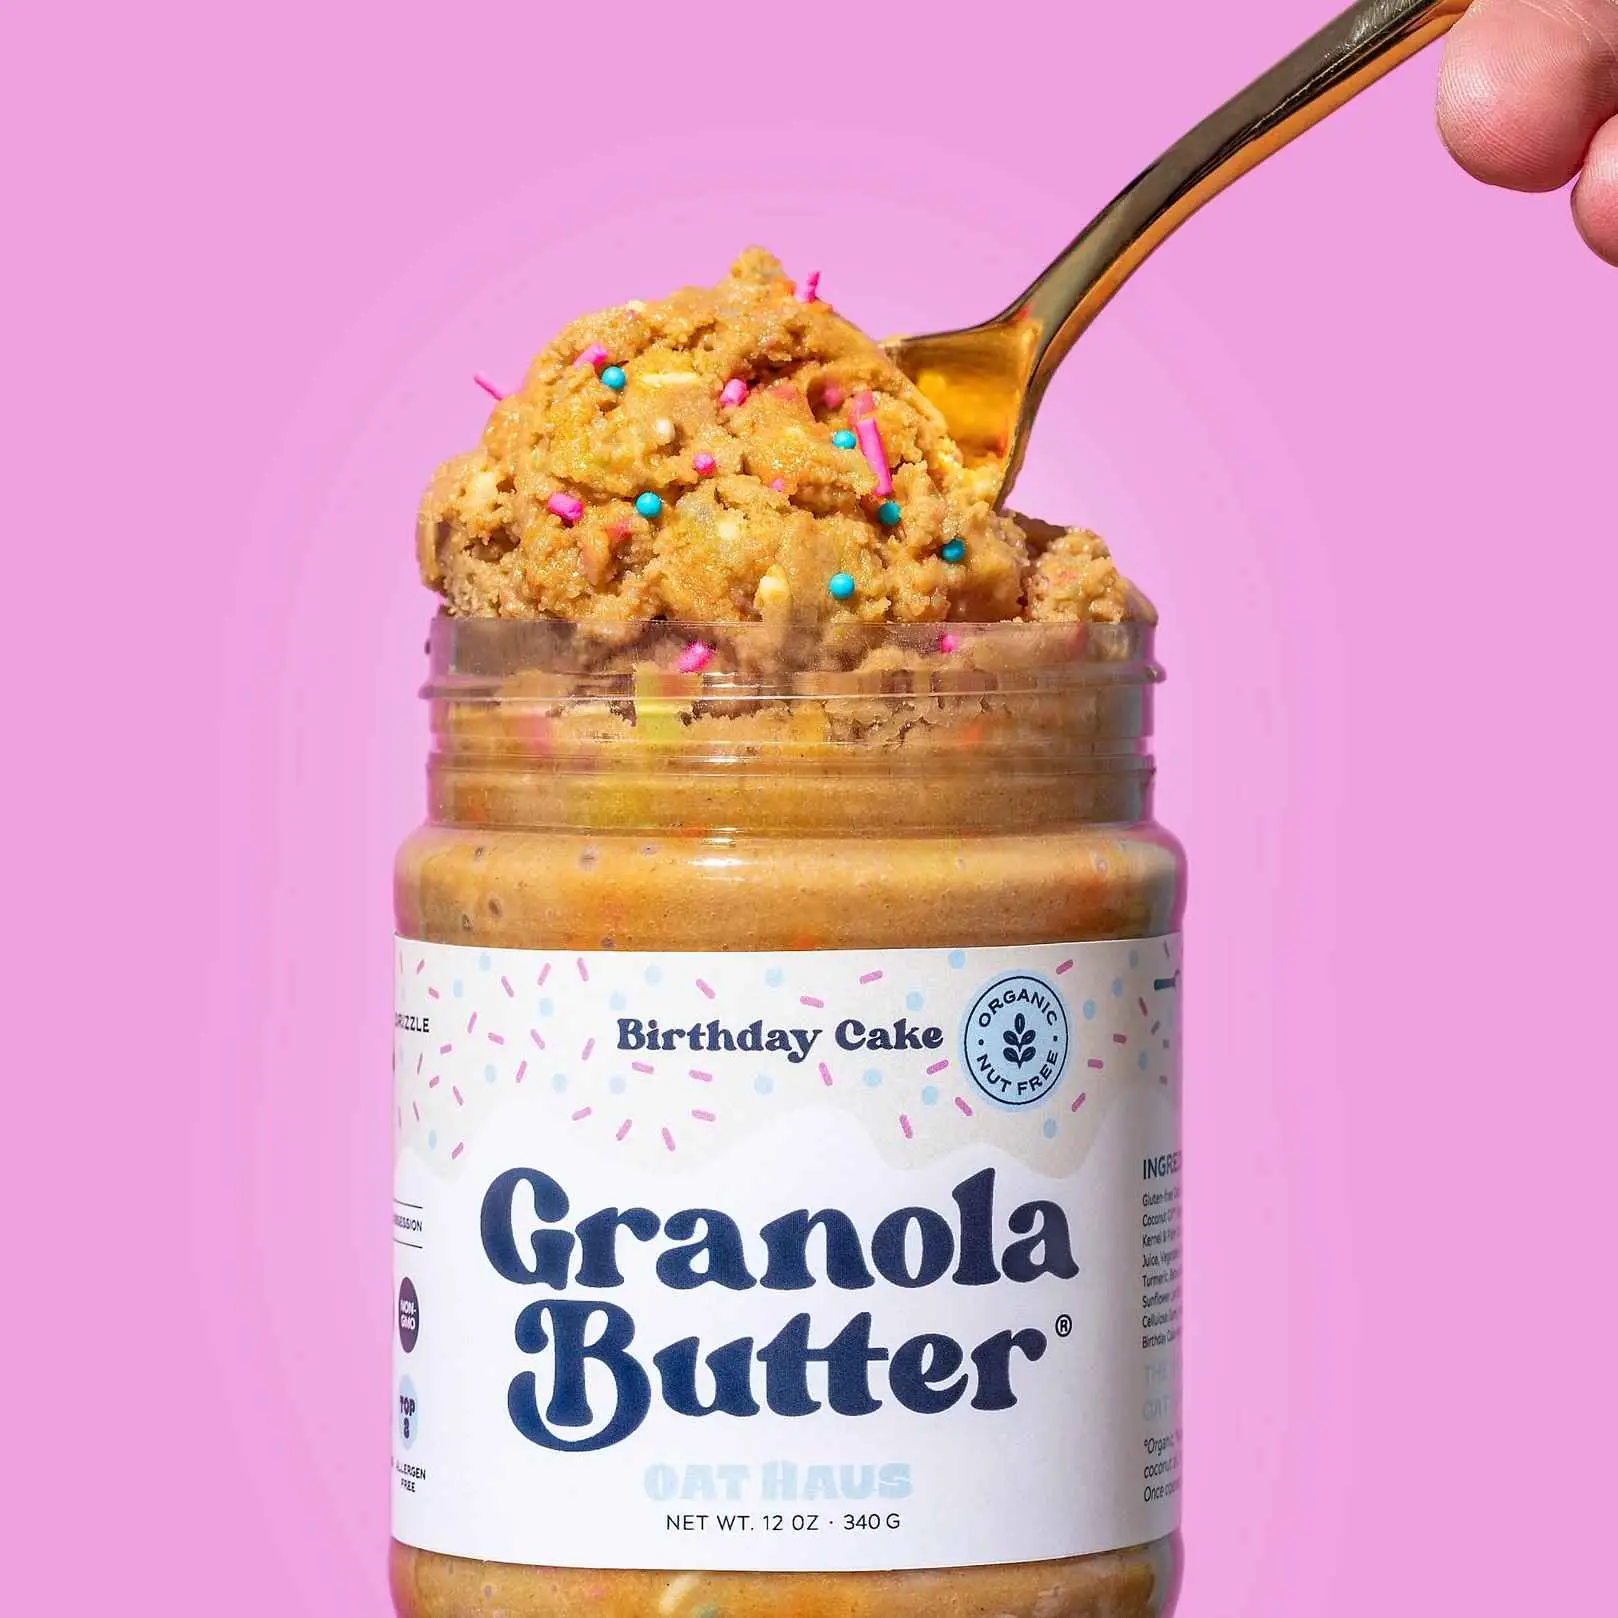 Easy Stir Birthday Cake Granola Butter Delivery